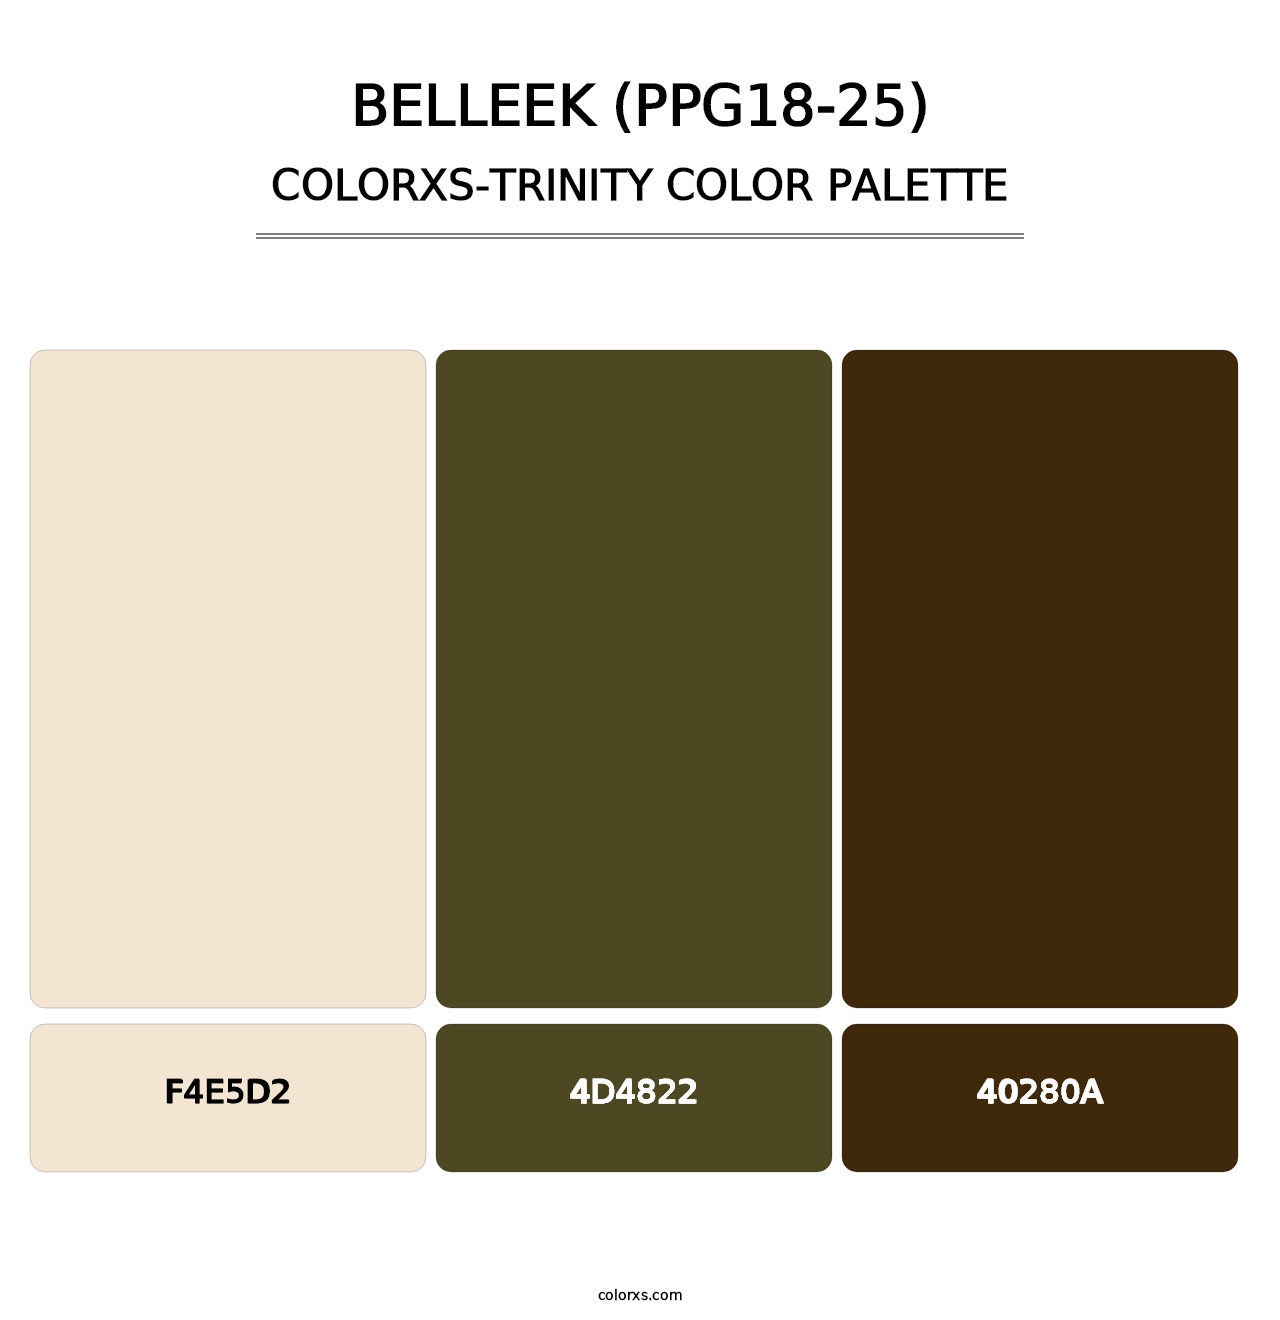 Belleek (PPG18-25) - Colorxs Trinity Palette